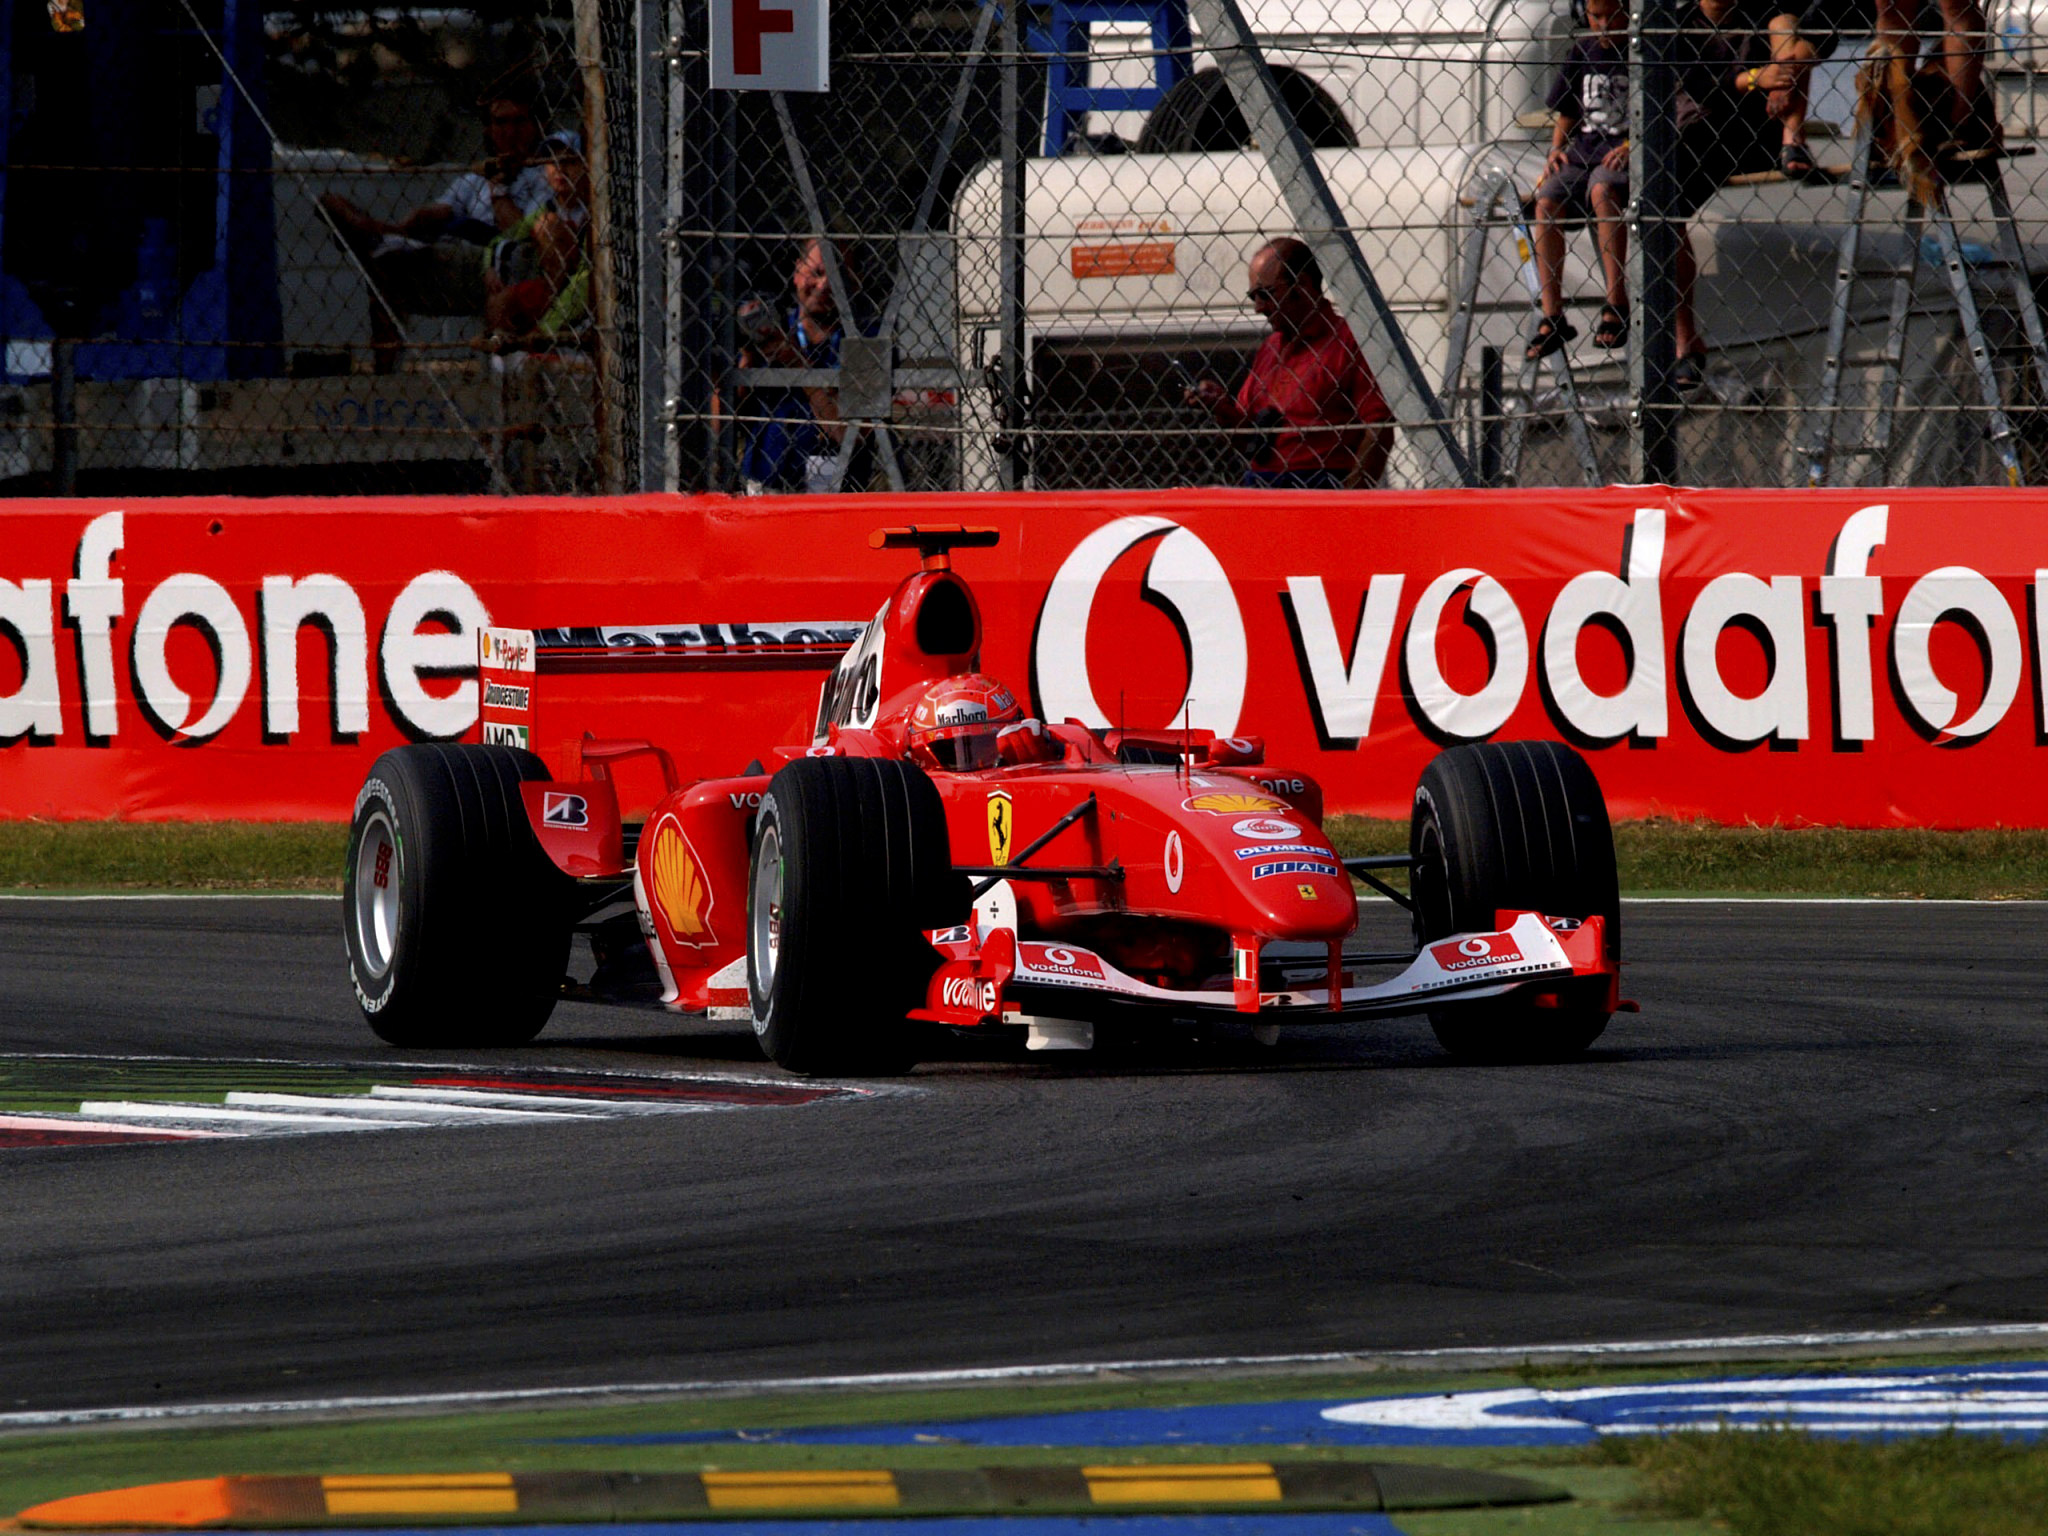  2004 Ferrari F2004 Wallpaper.